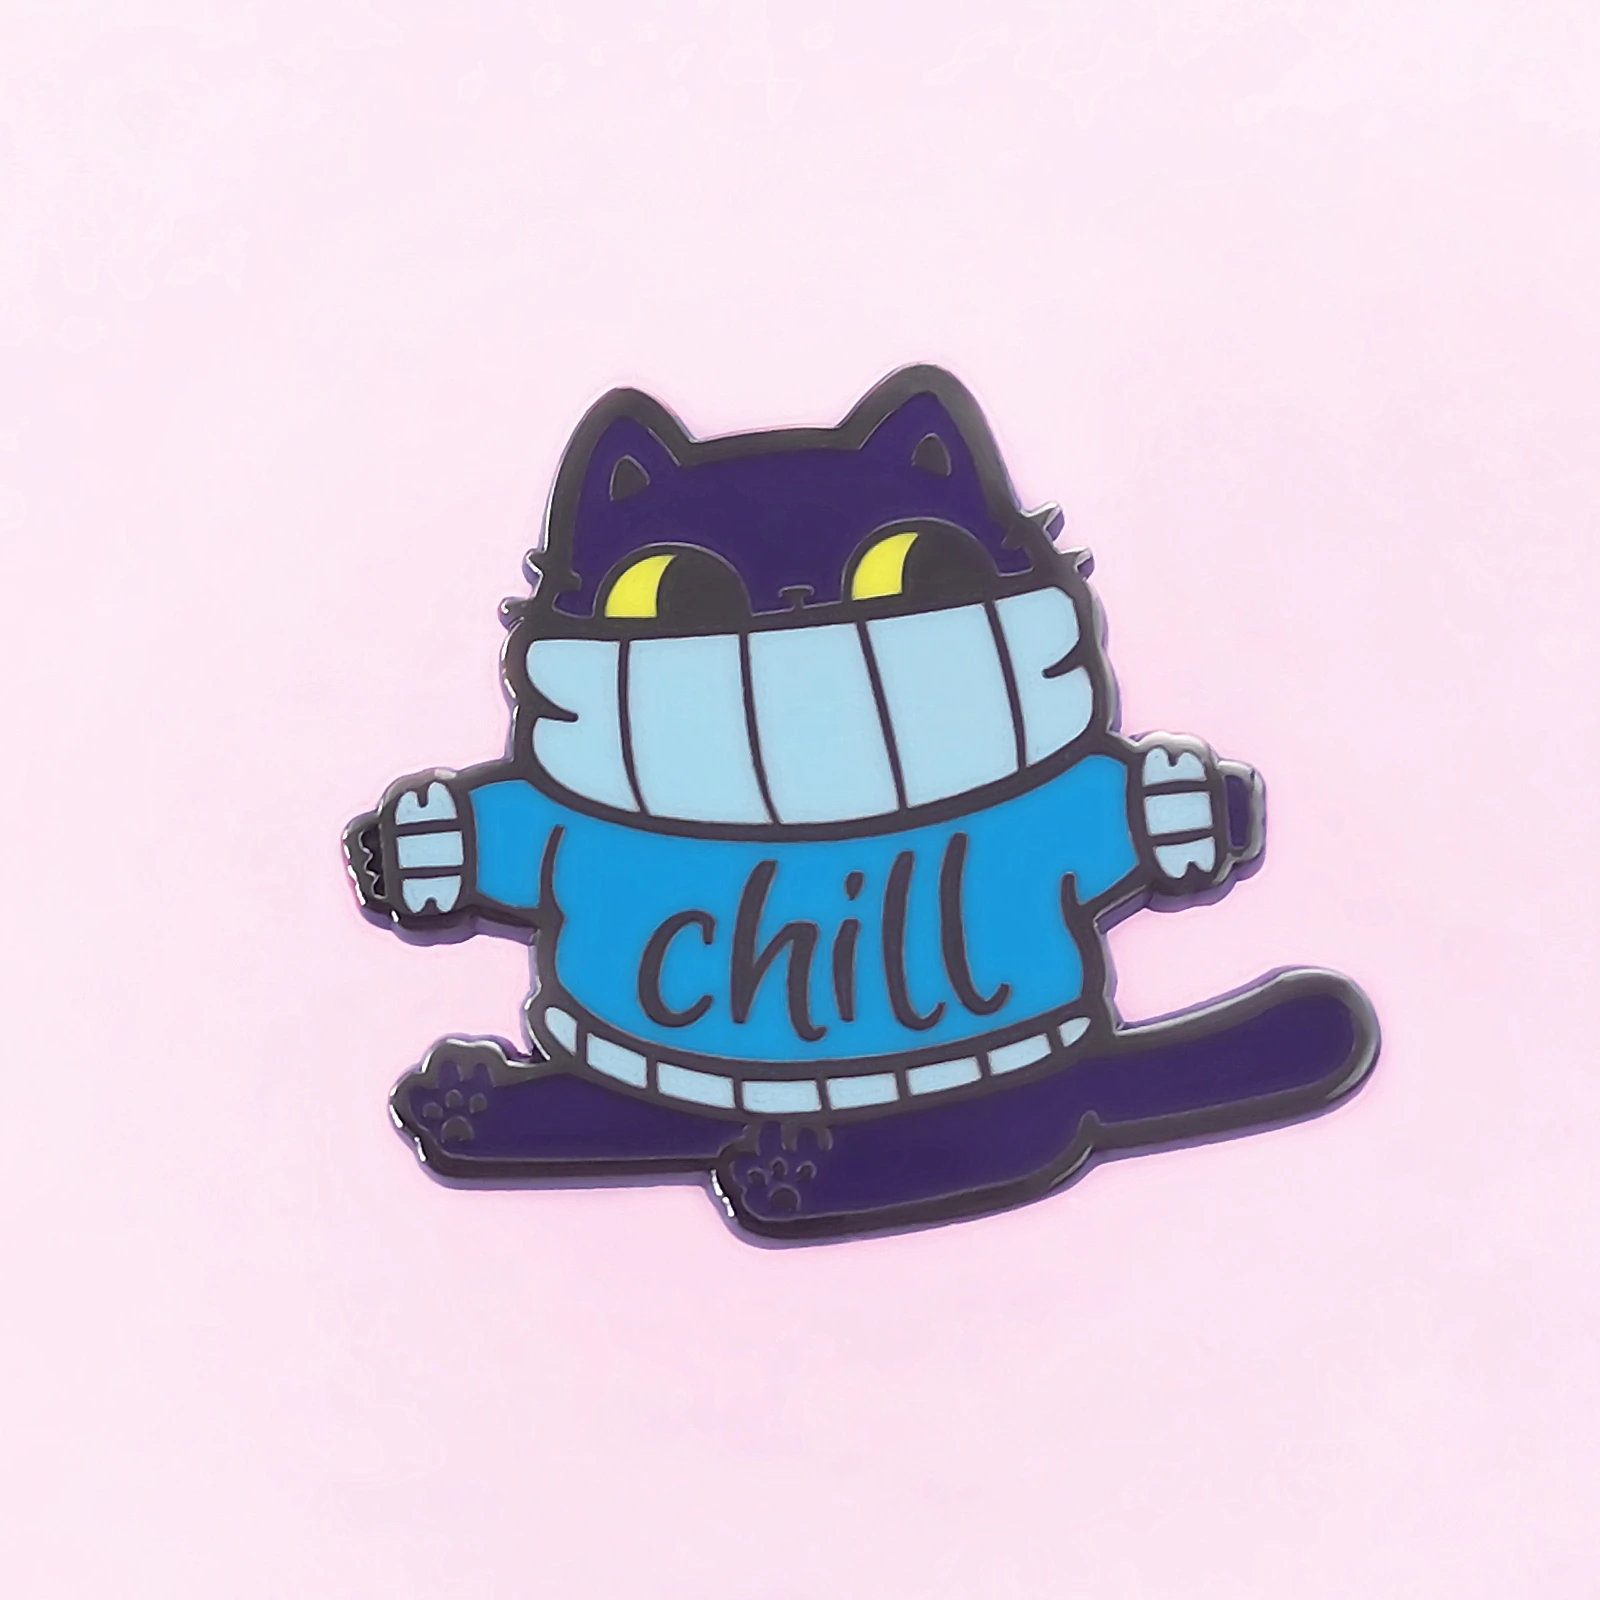 

Cute Chill Sweater Cat Hard Enamel Pin Cartoon Animal Fat Kitty Badge Brooch Fashion Lapel Pins Backpack Jewelry Accessories